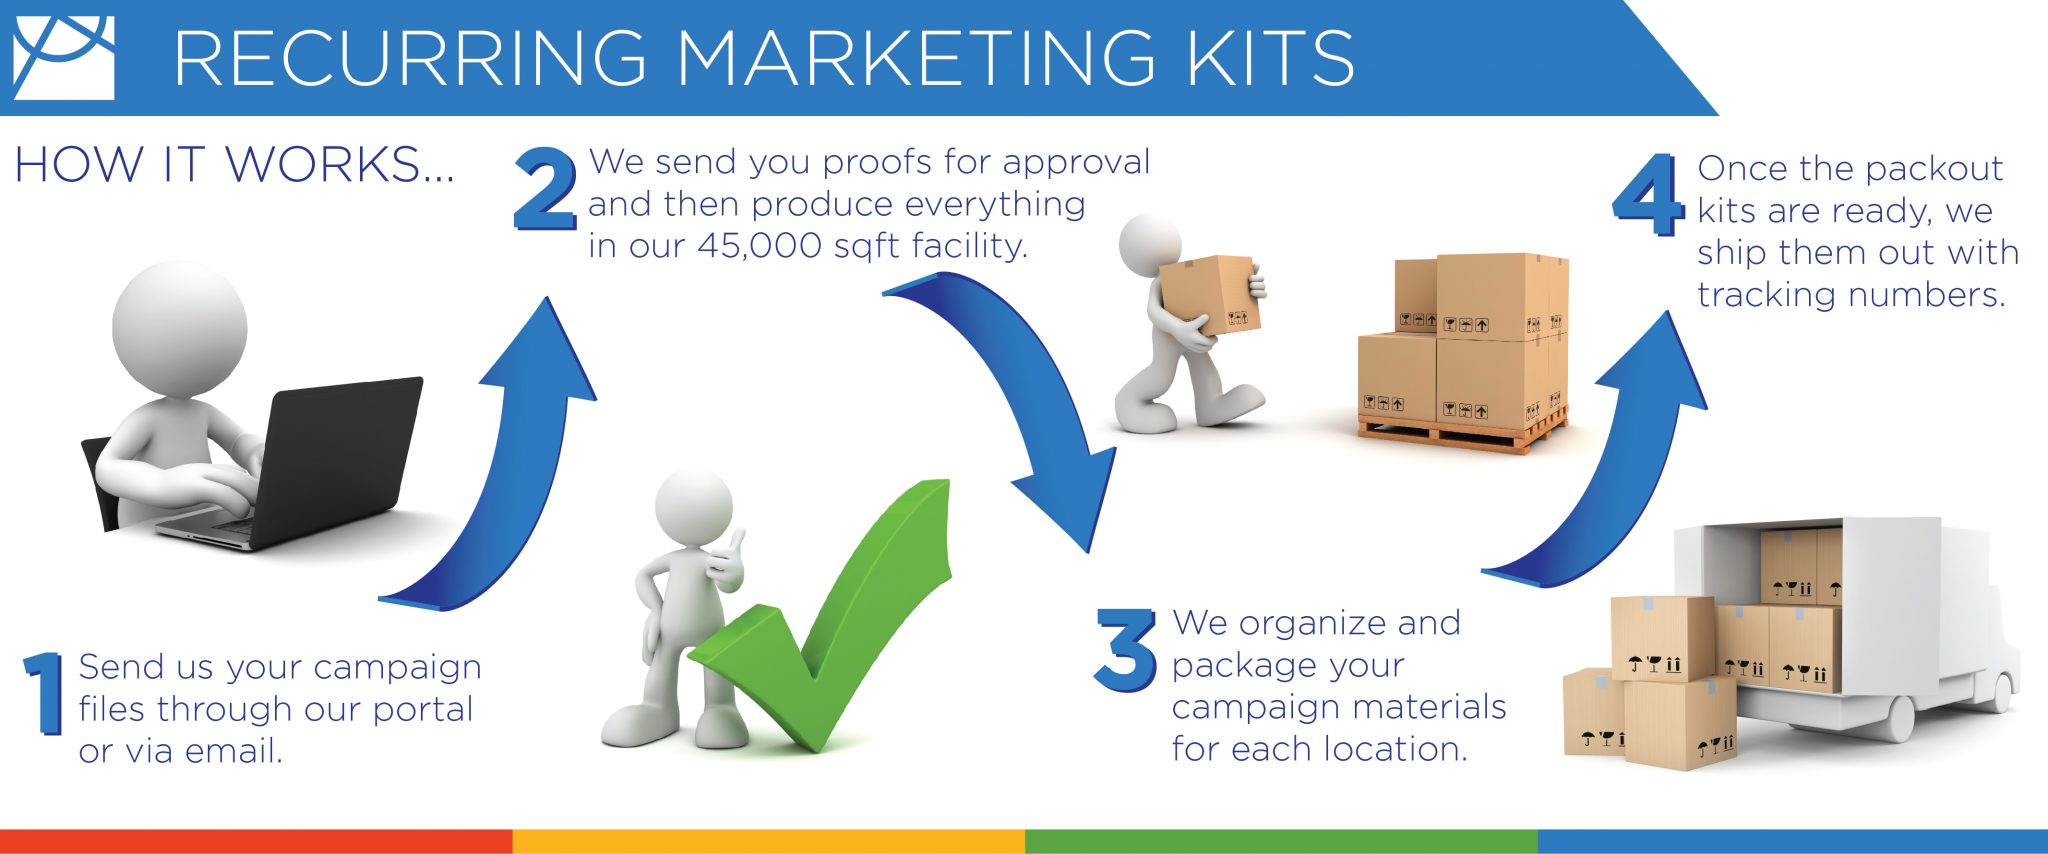 Recurring Marketing Kits